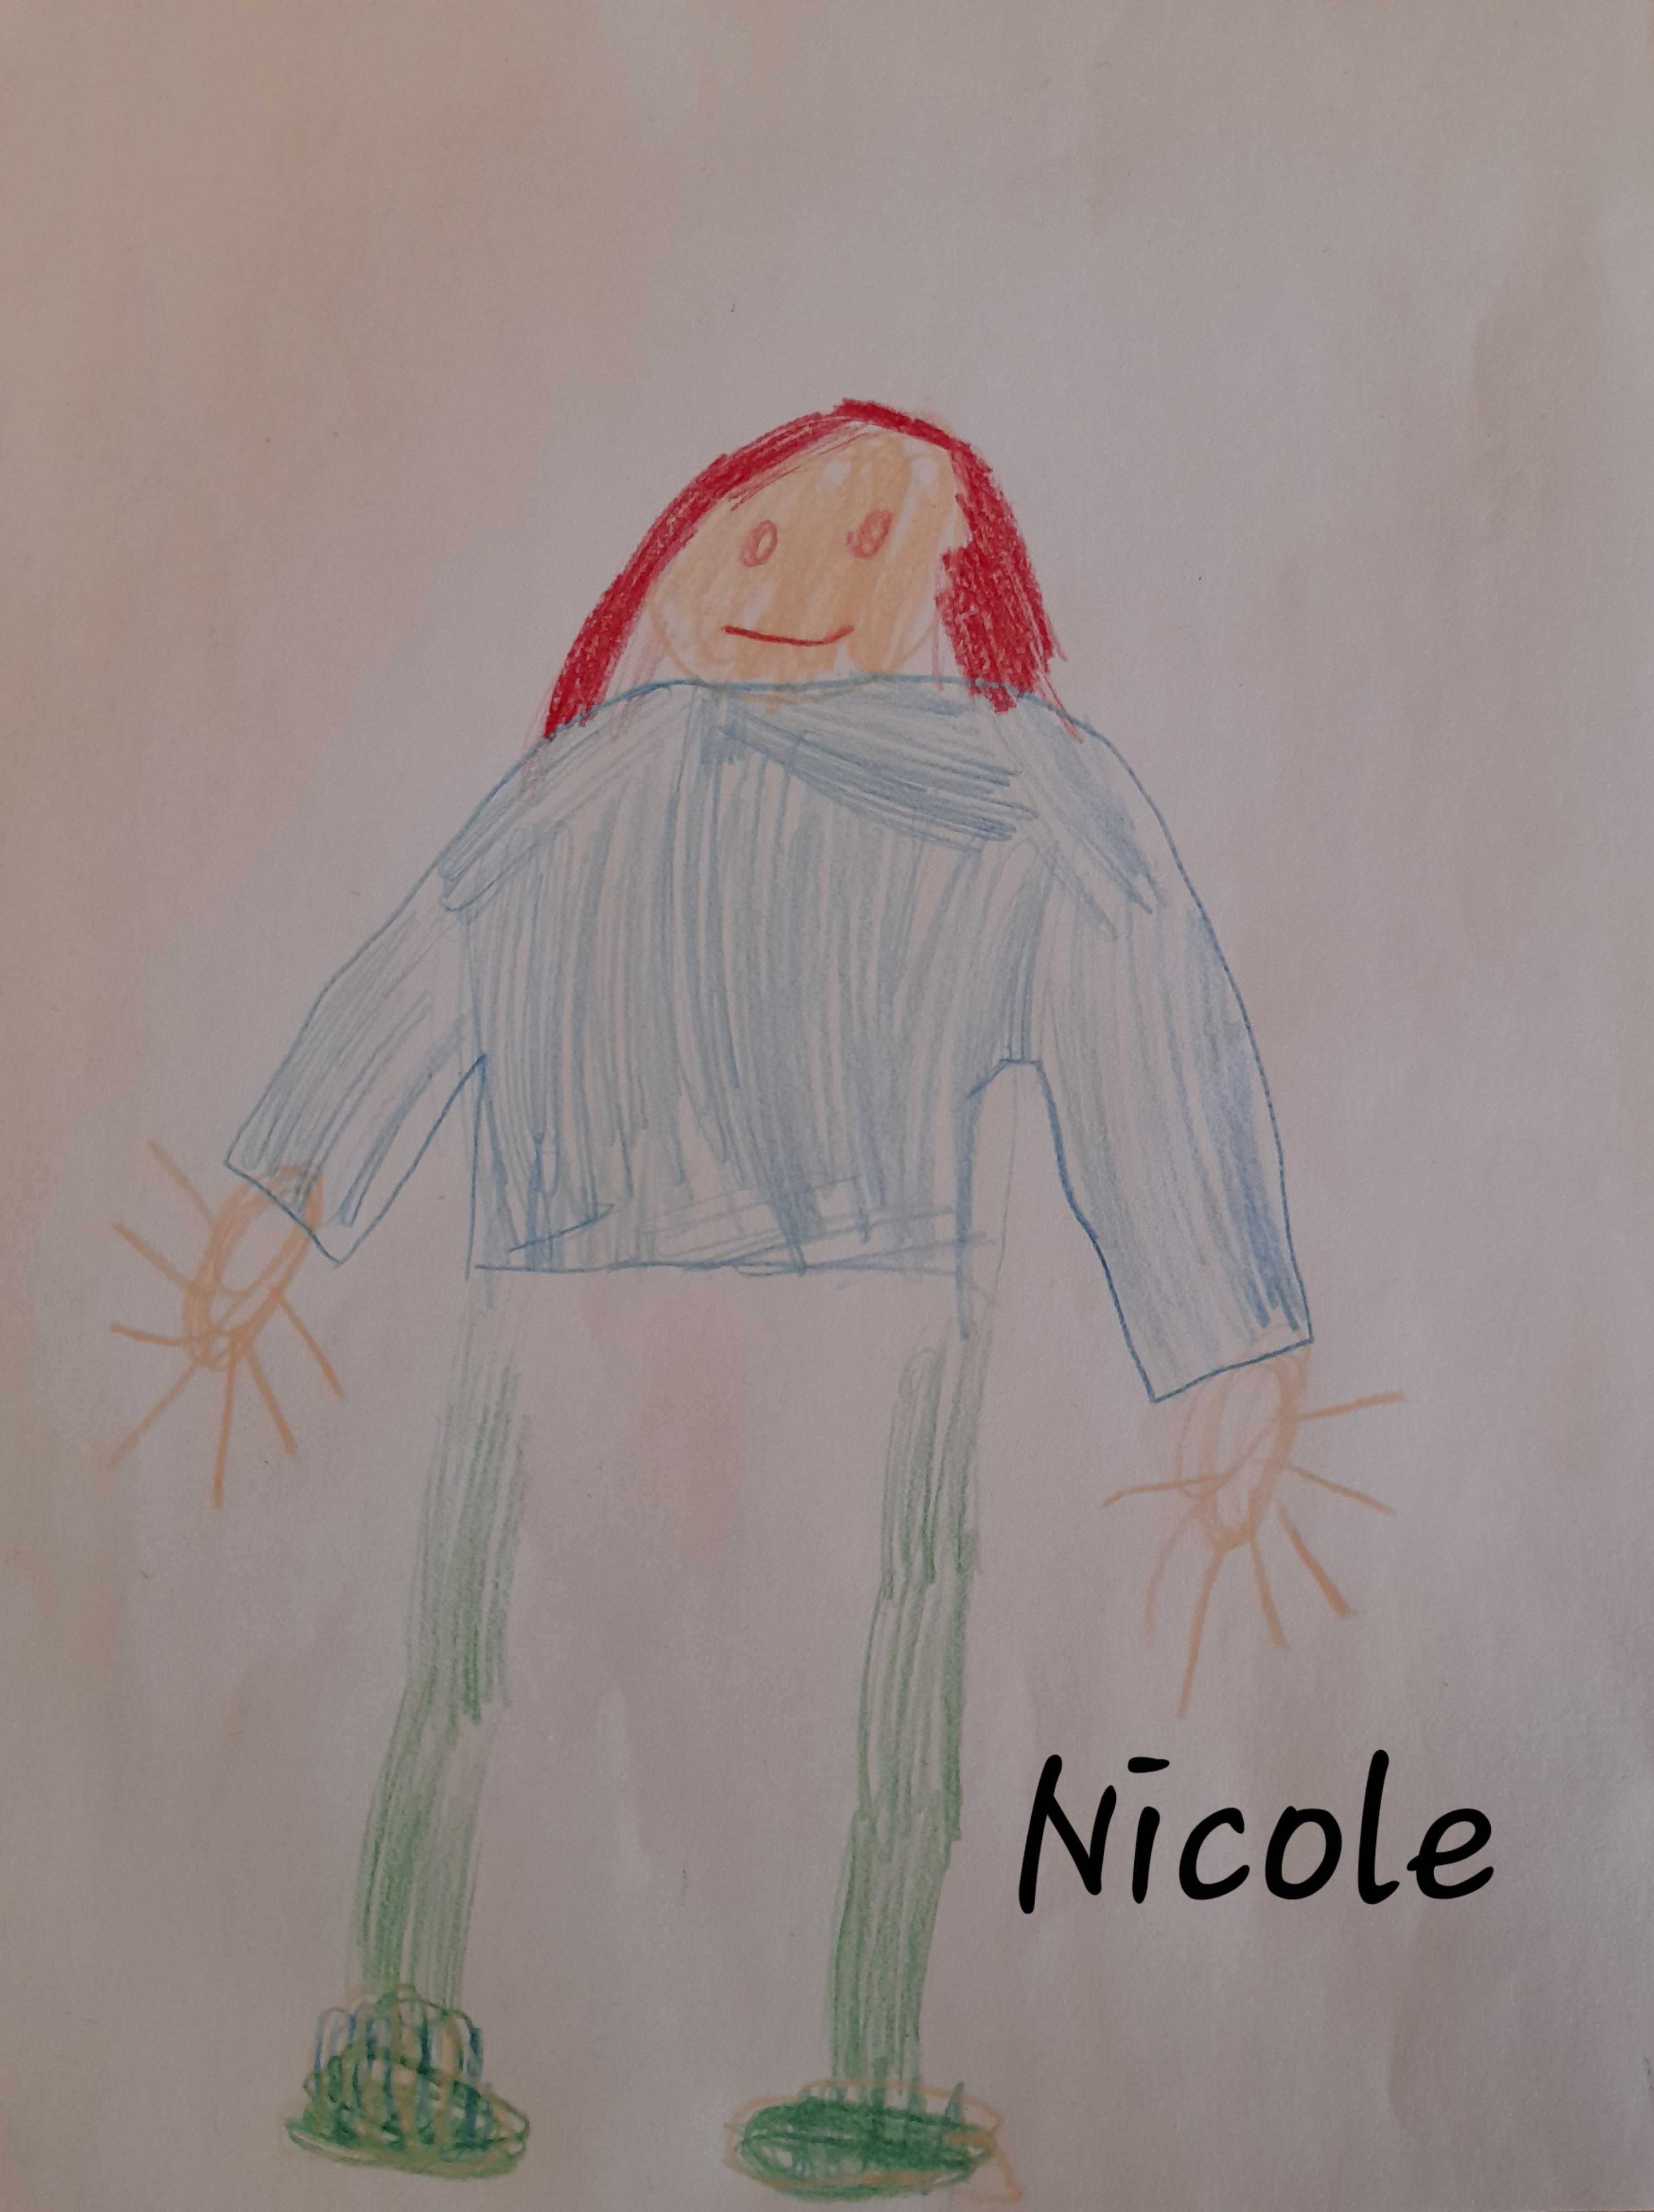 Kinderpflegerin Nicole